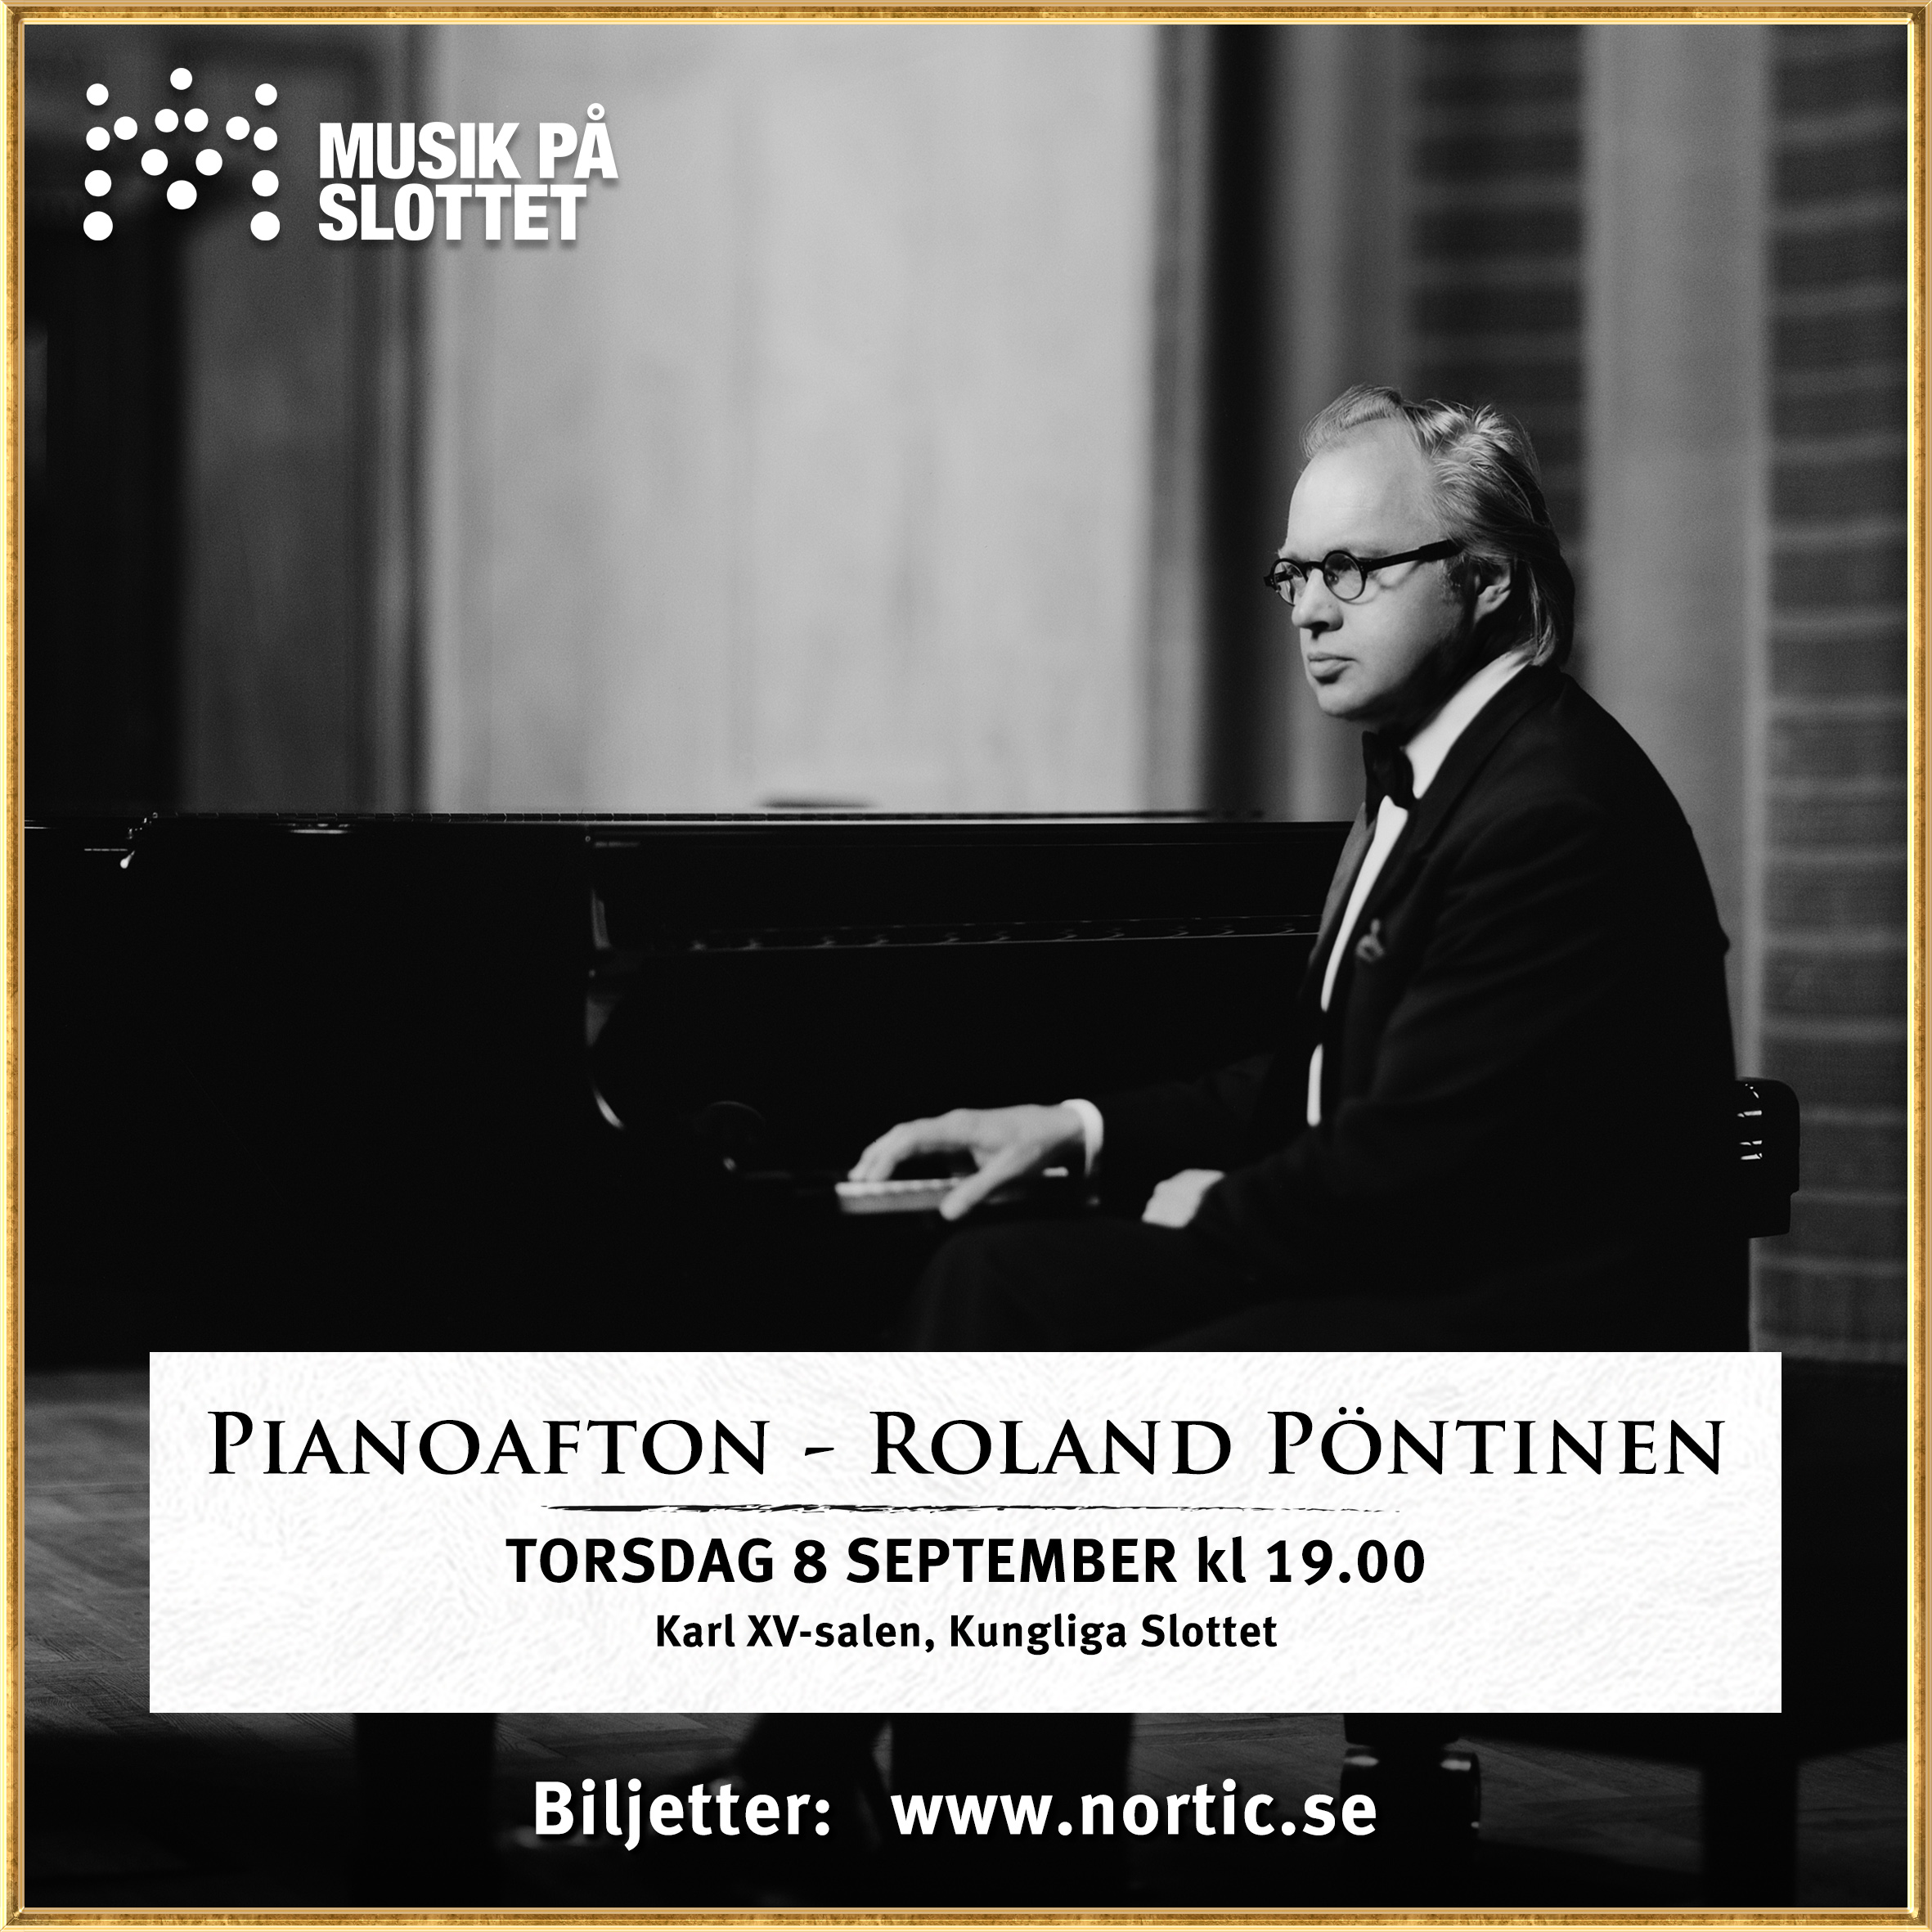 Pianoafton - Roland Pöntinen